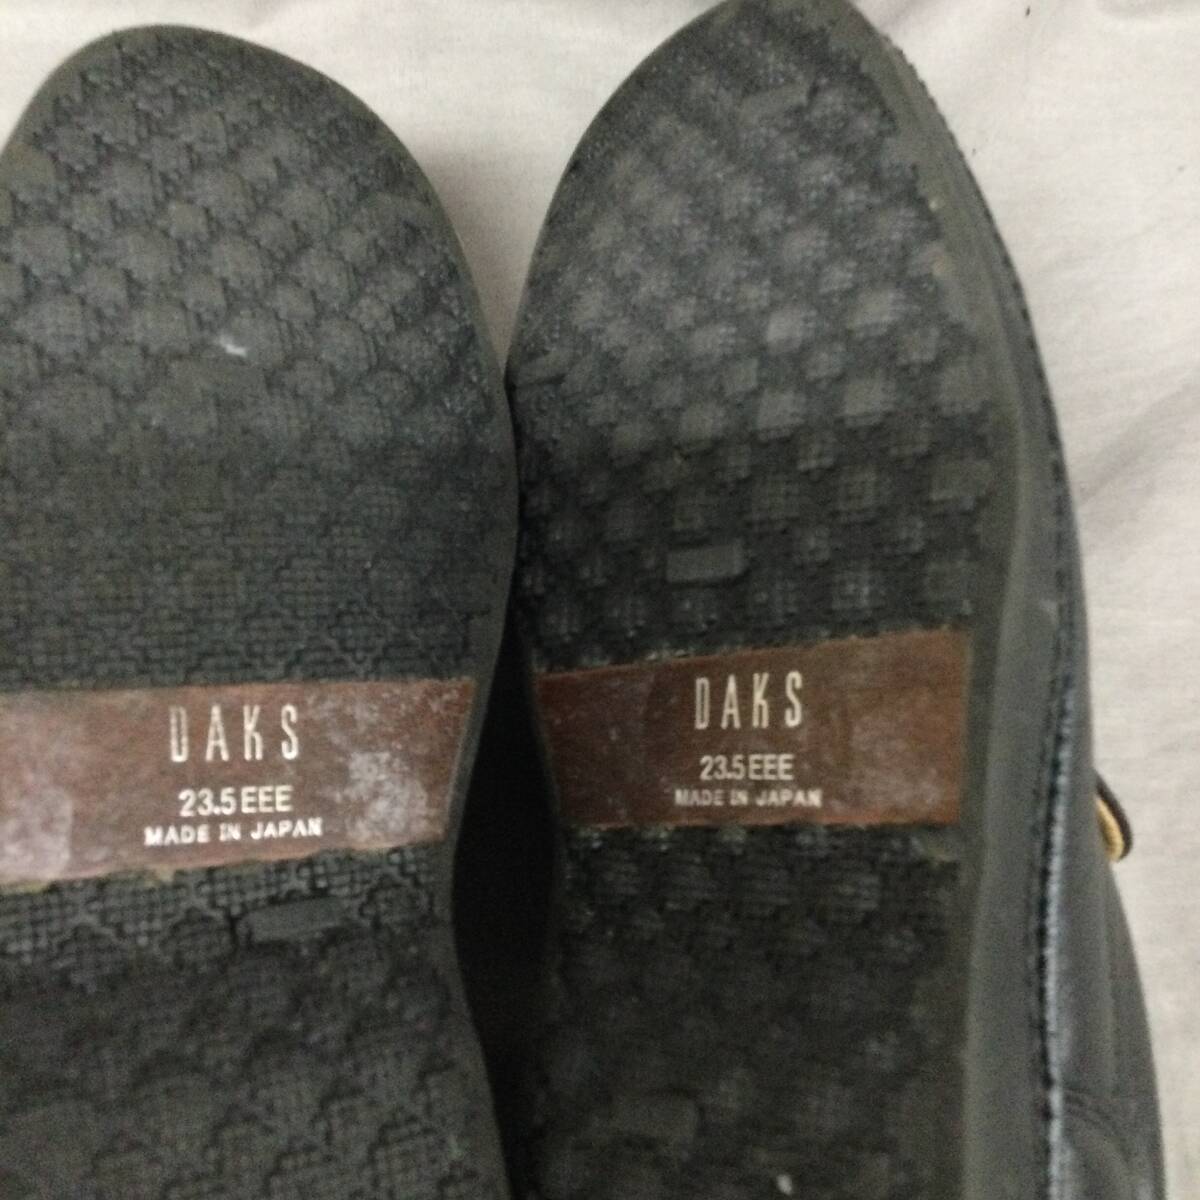 060321 261061-2 DAKS ダックス サイズ 23.5EEE レディース ブラック 靴の画像8